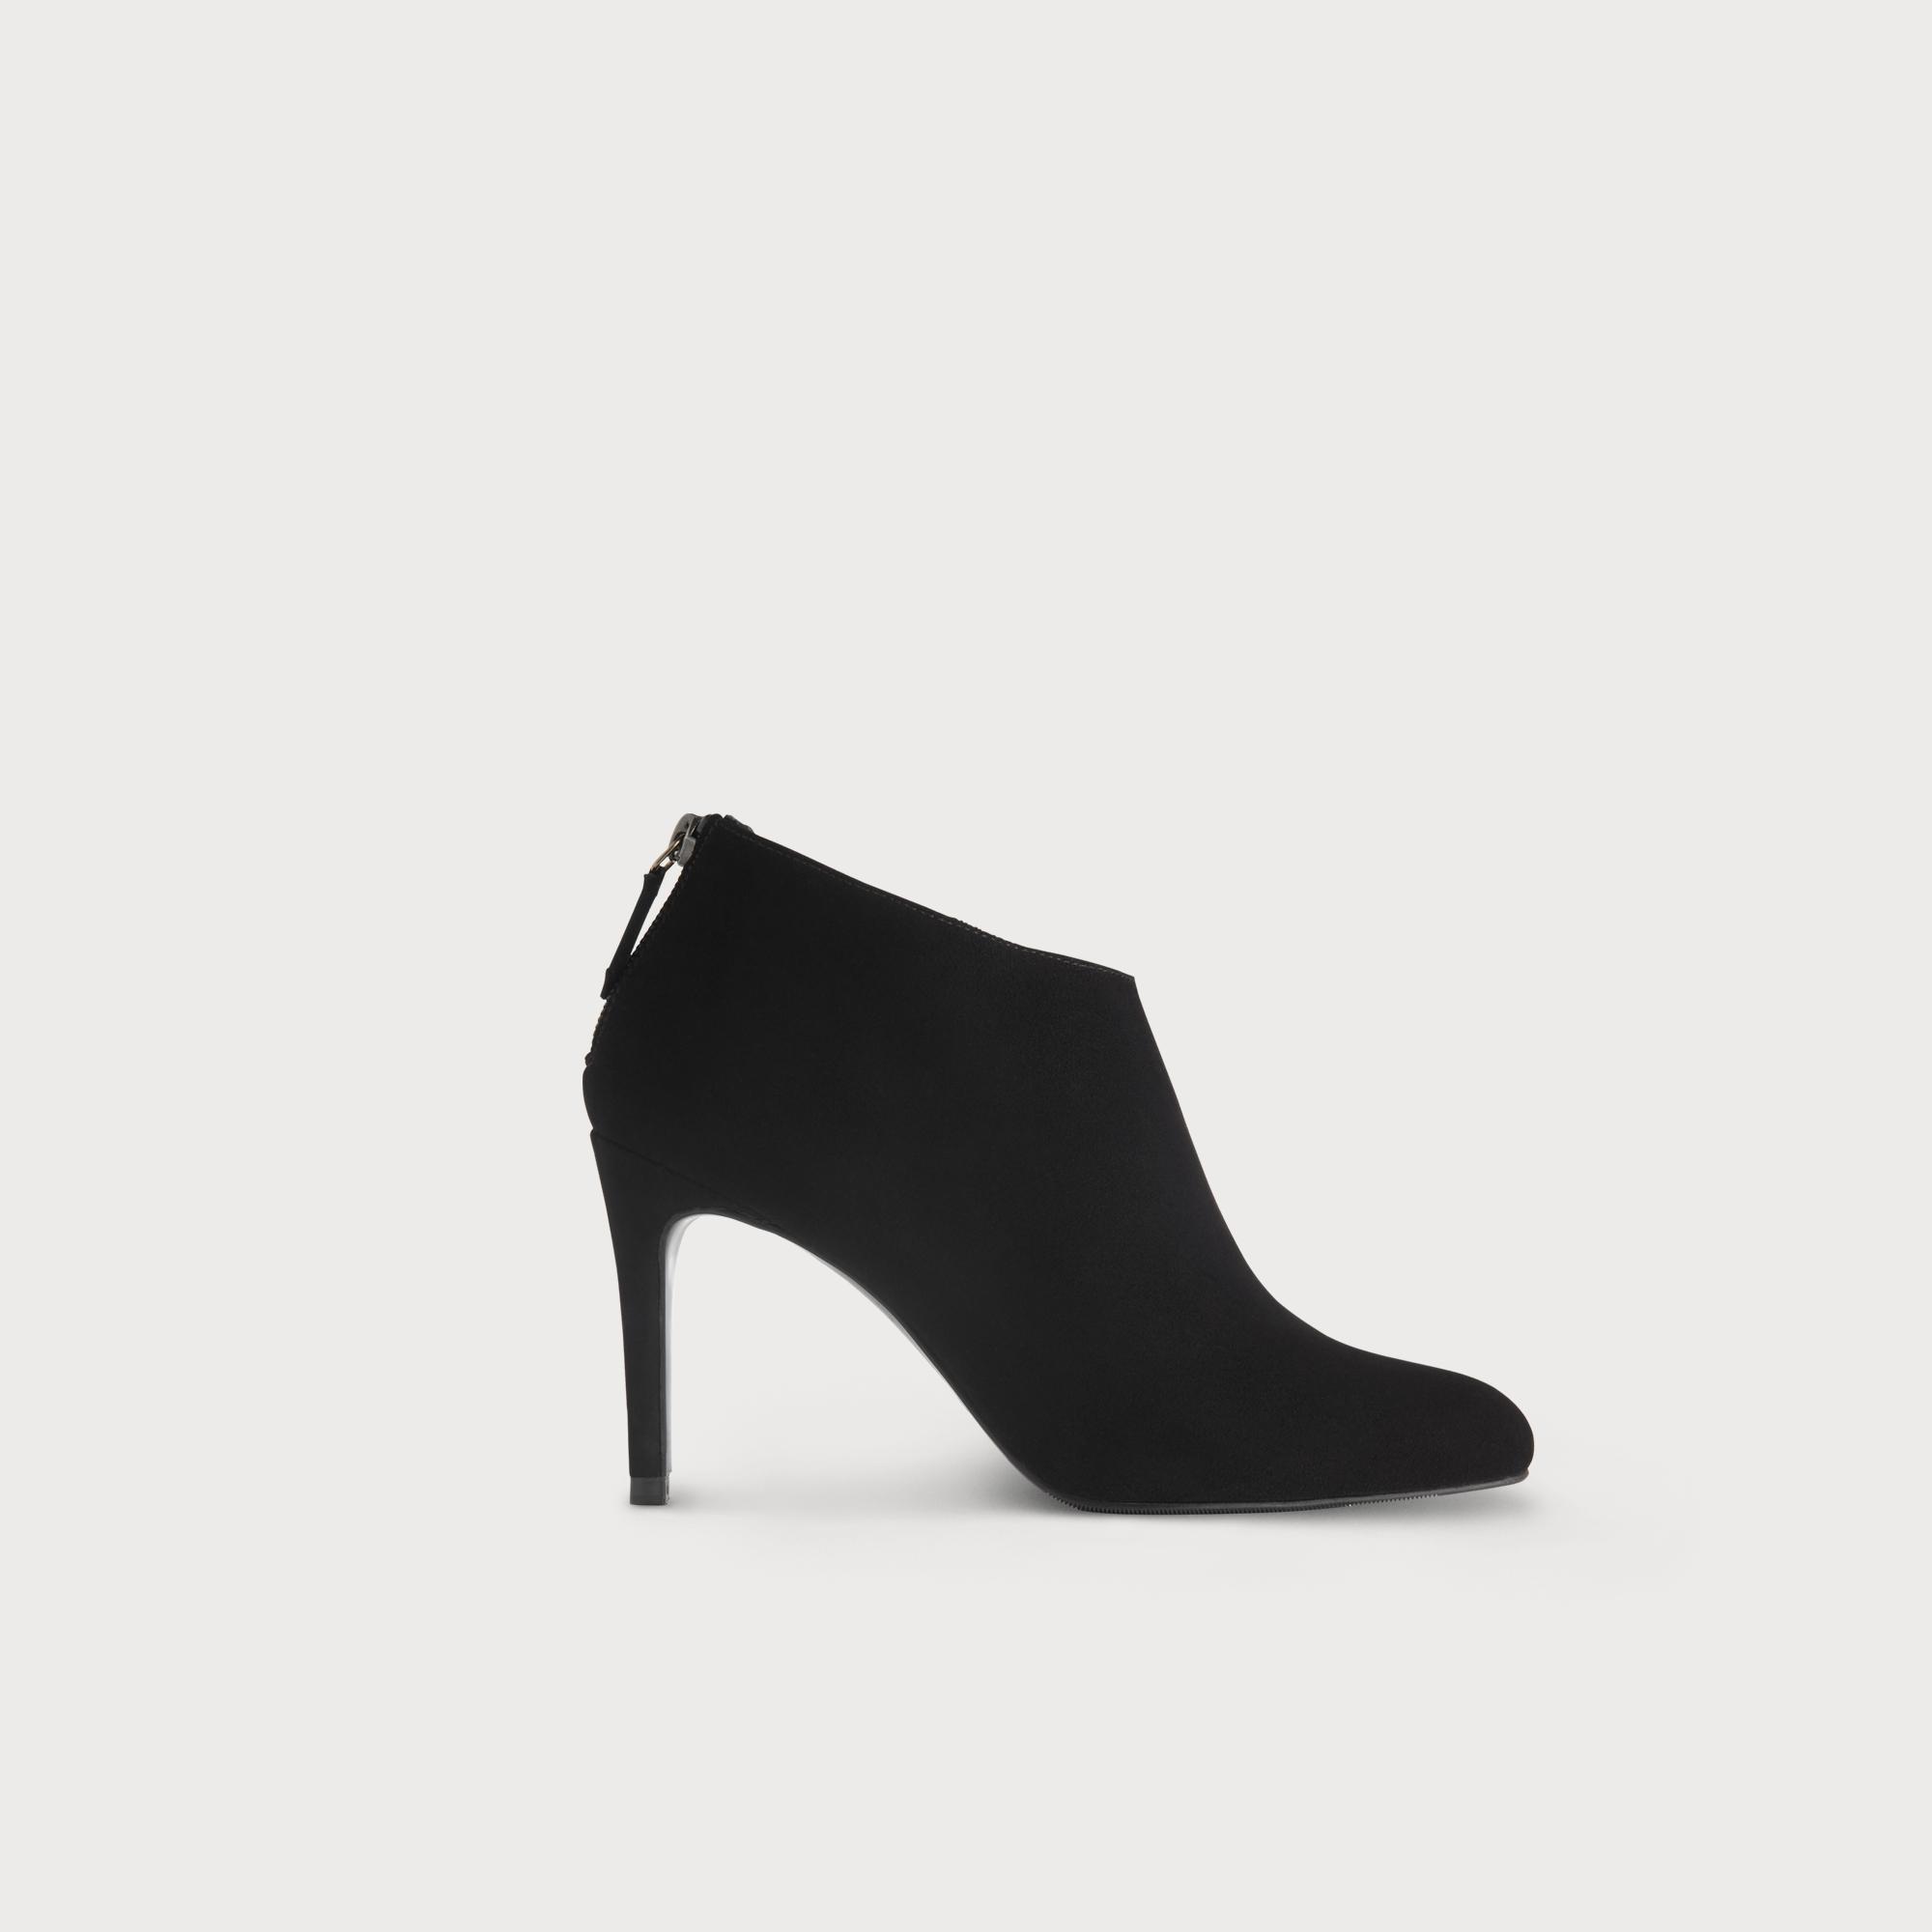 black shoe boots uk